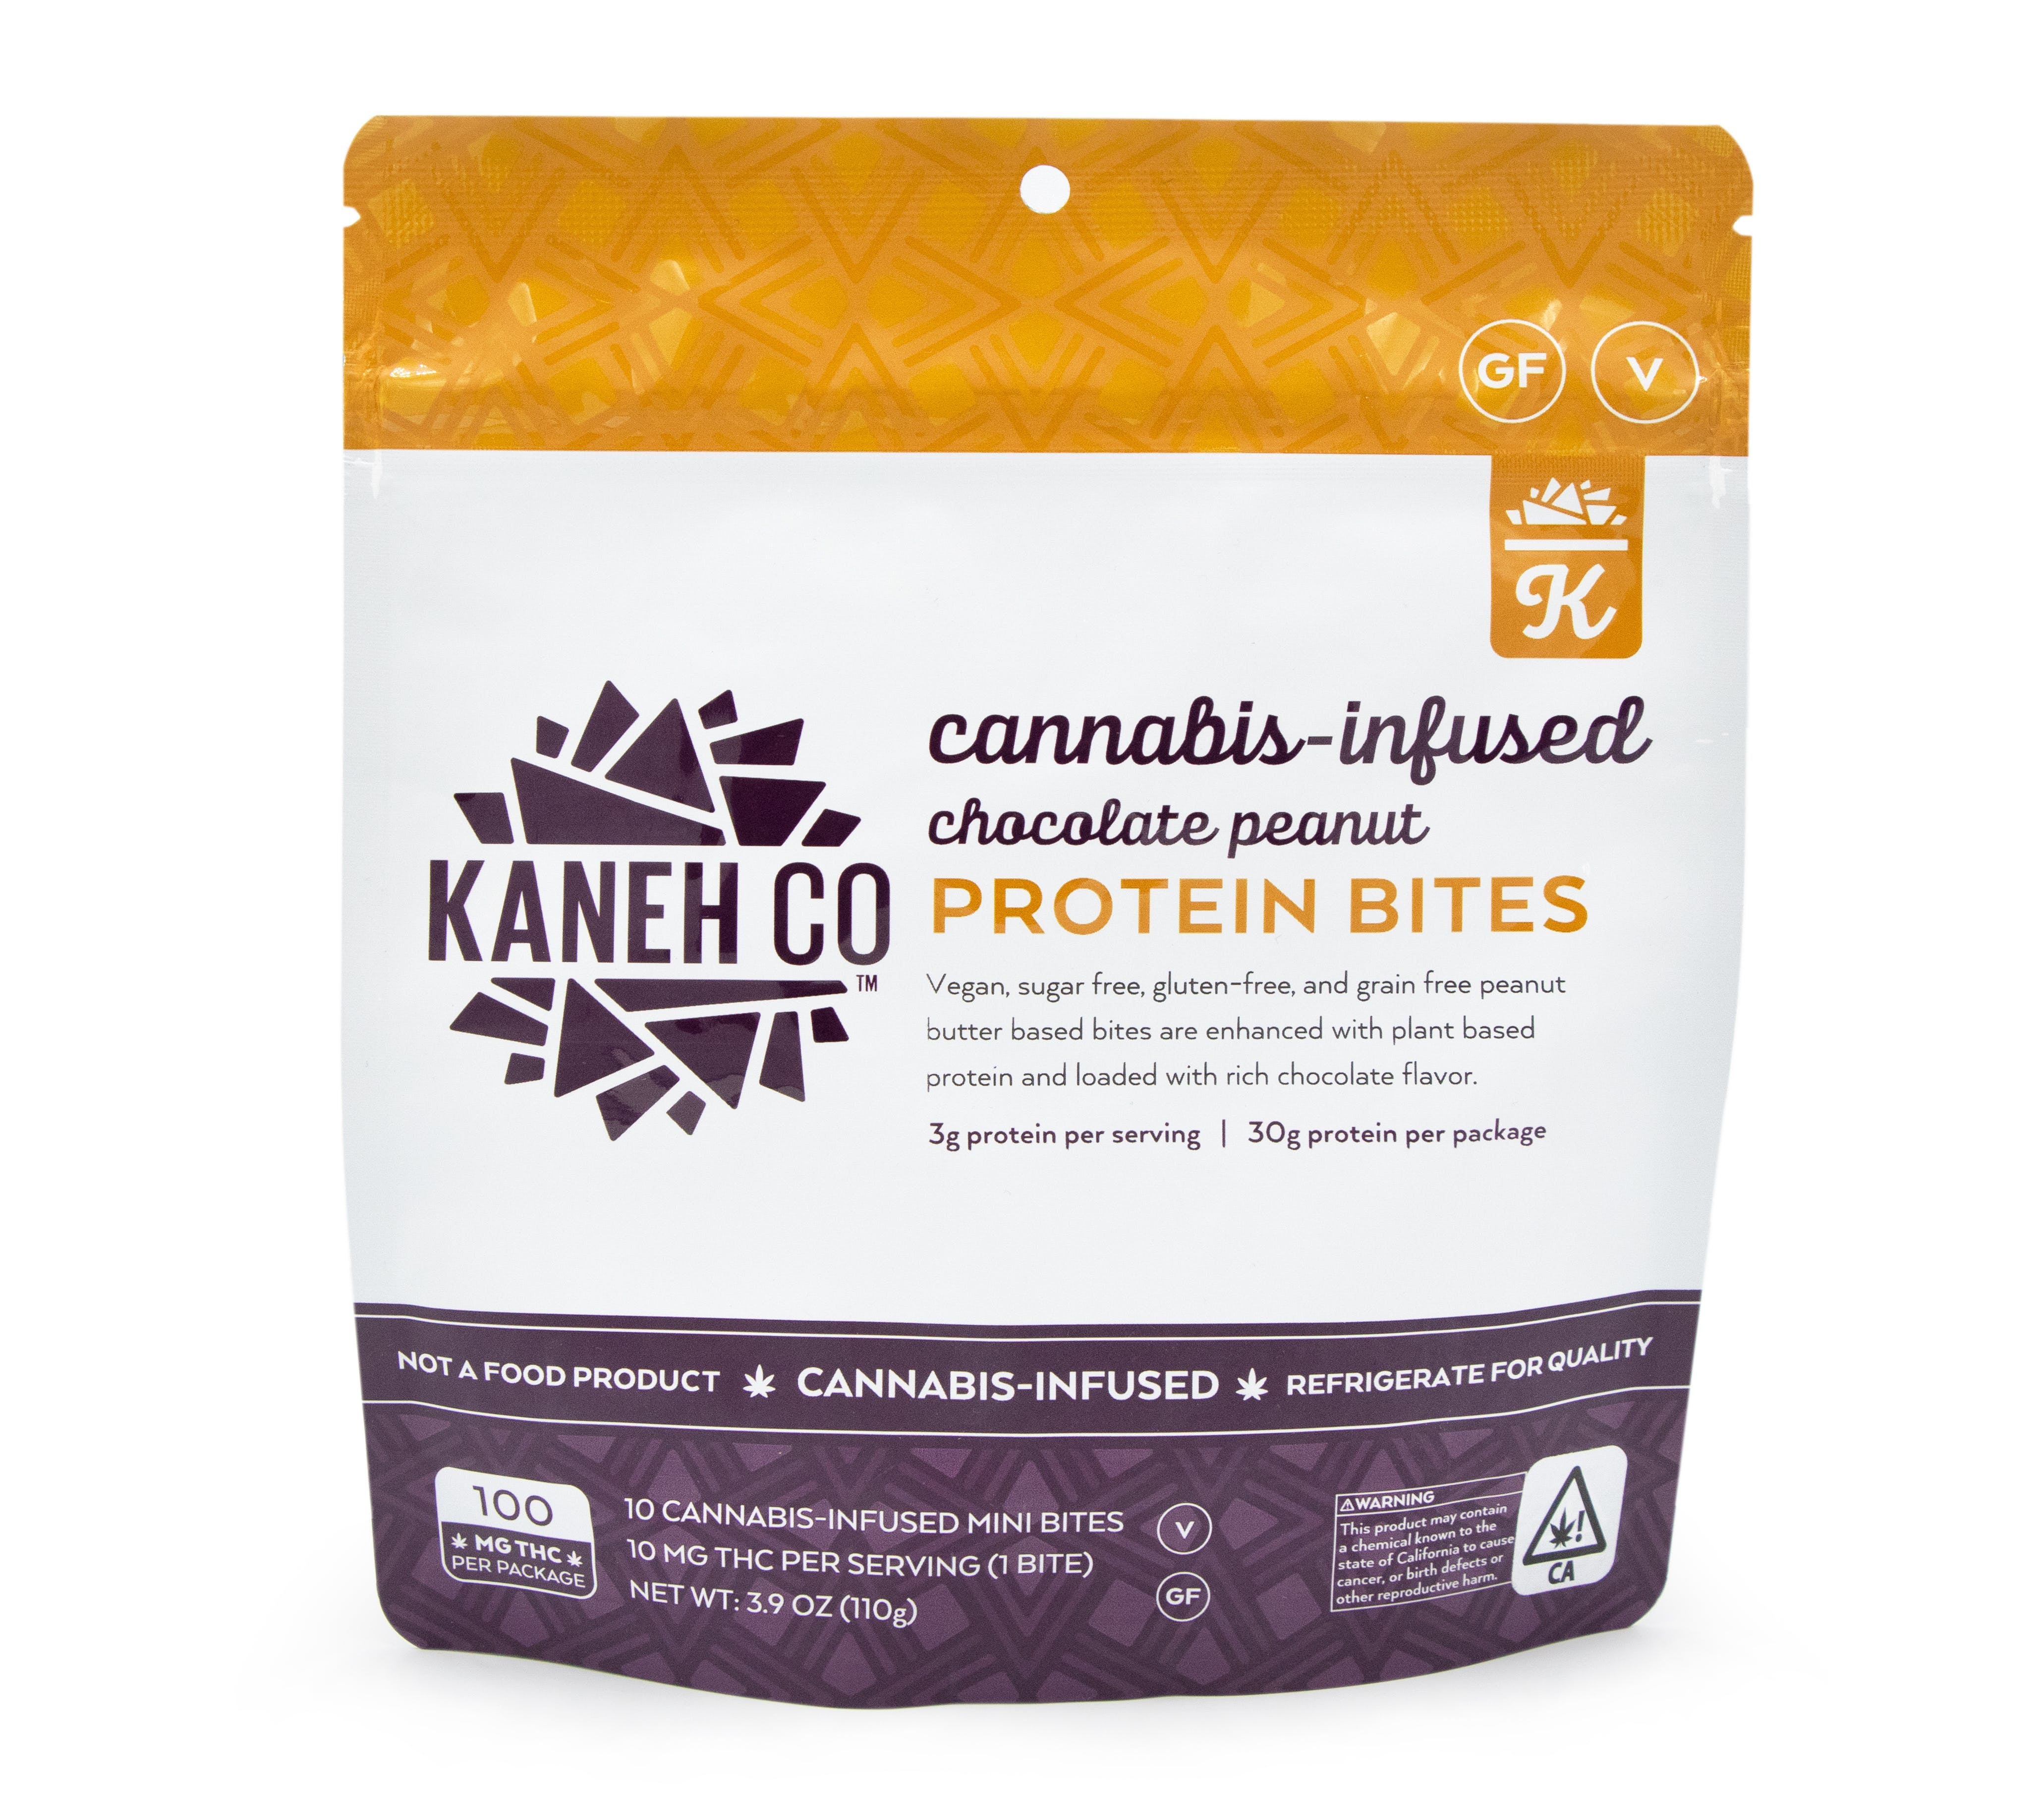 marijuana-dispensaries-110-s-robertson-blvd-los-angeles-kaneh-co-chocolate-peanut-protein-bites